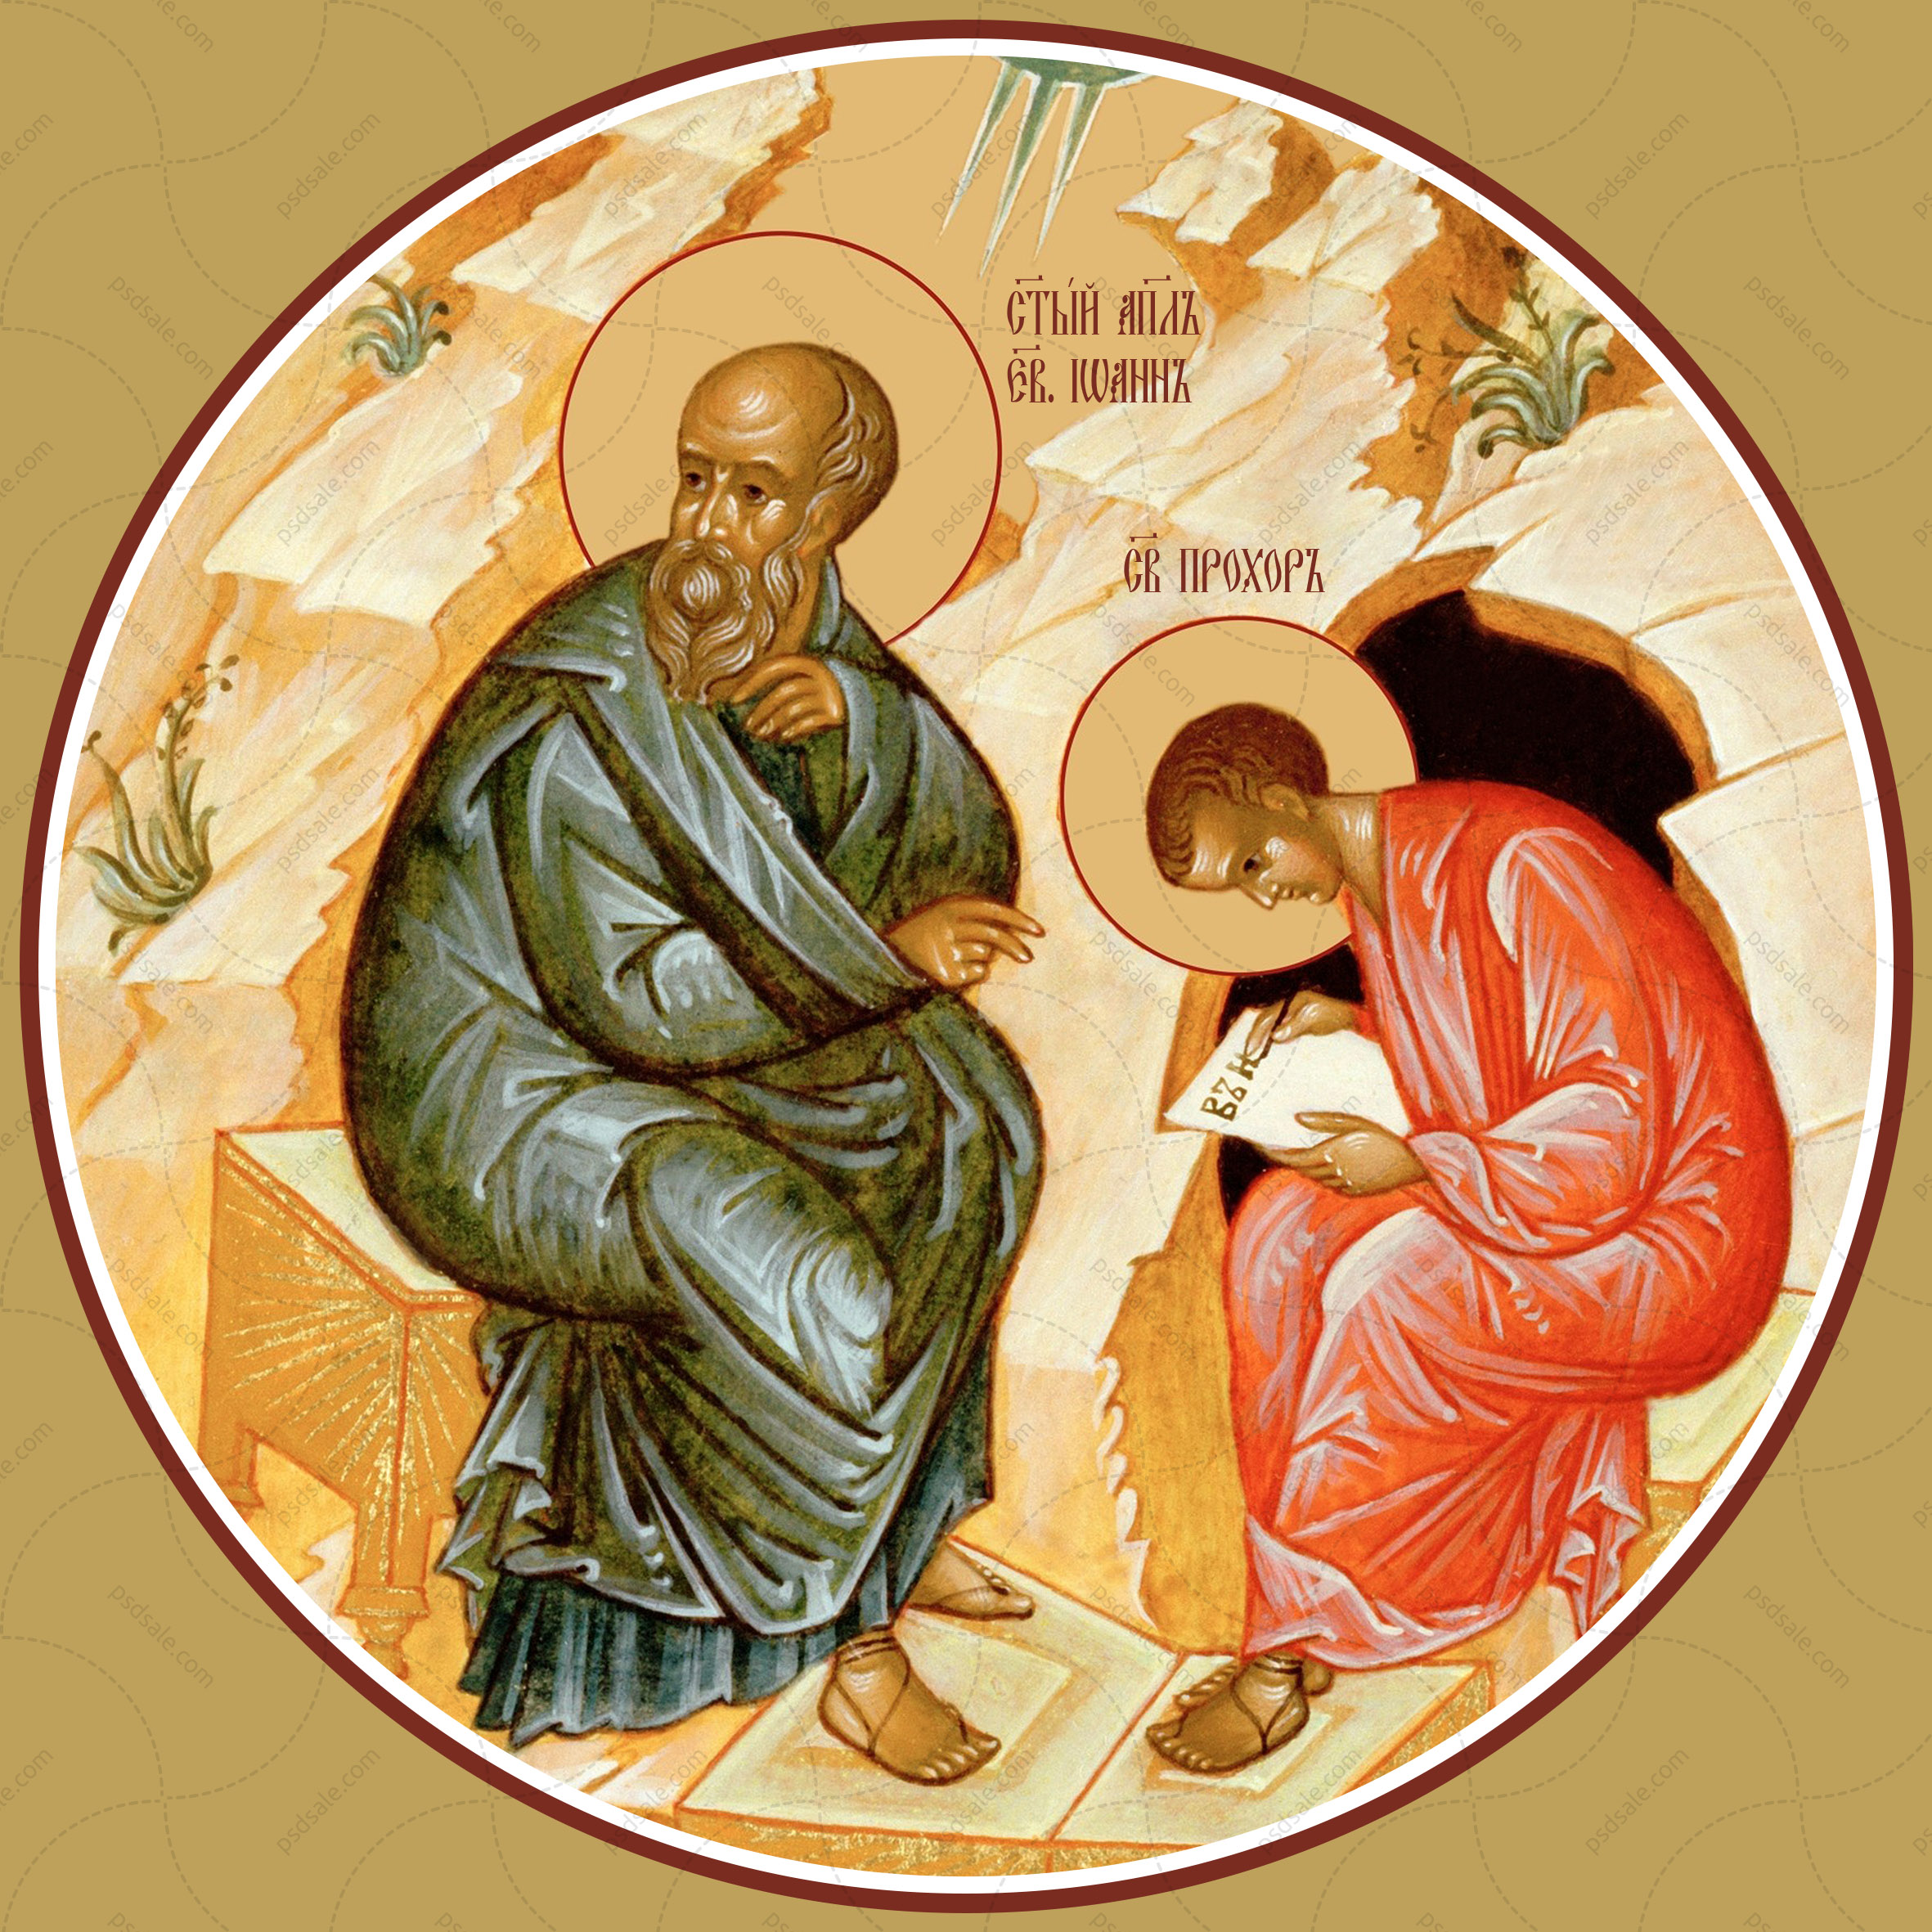 John the Evangelist (for iconostasis)